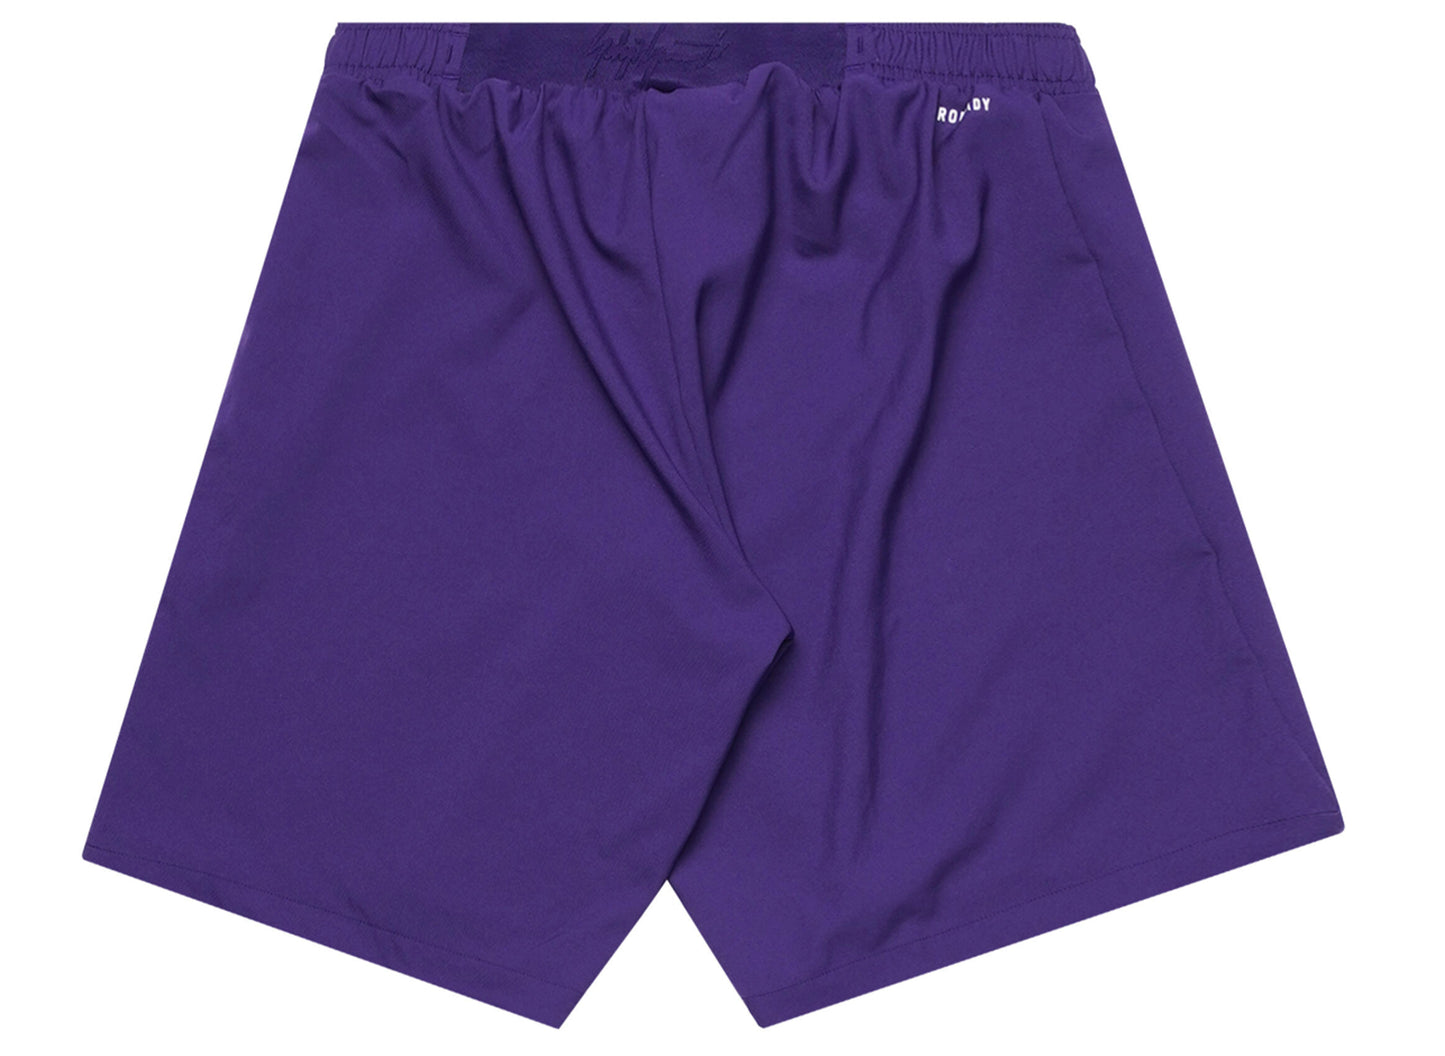 Adidas Y-3 x Real Madrid 23/24 Fourth Authentic Shorts in Purple xld